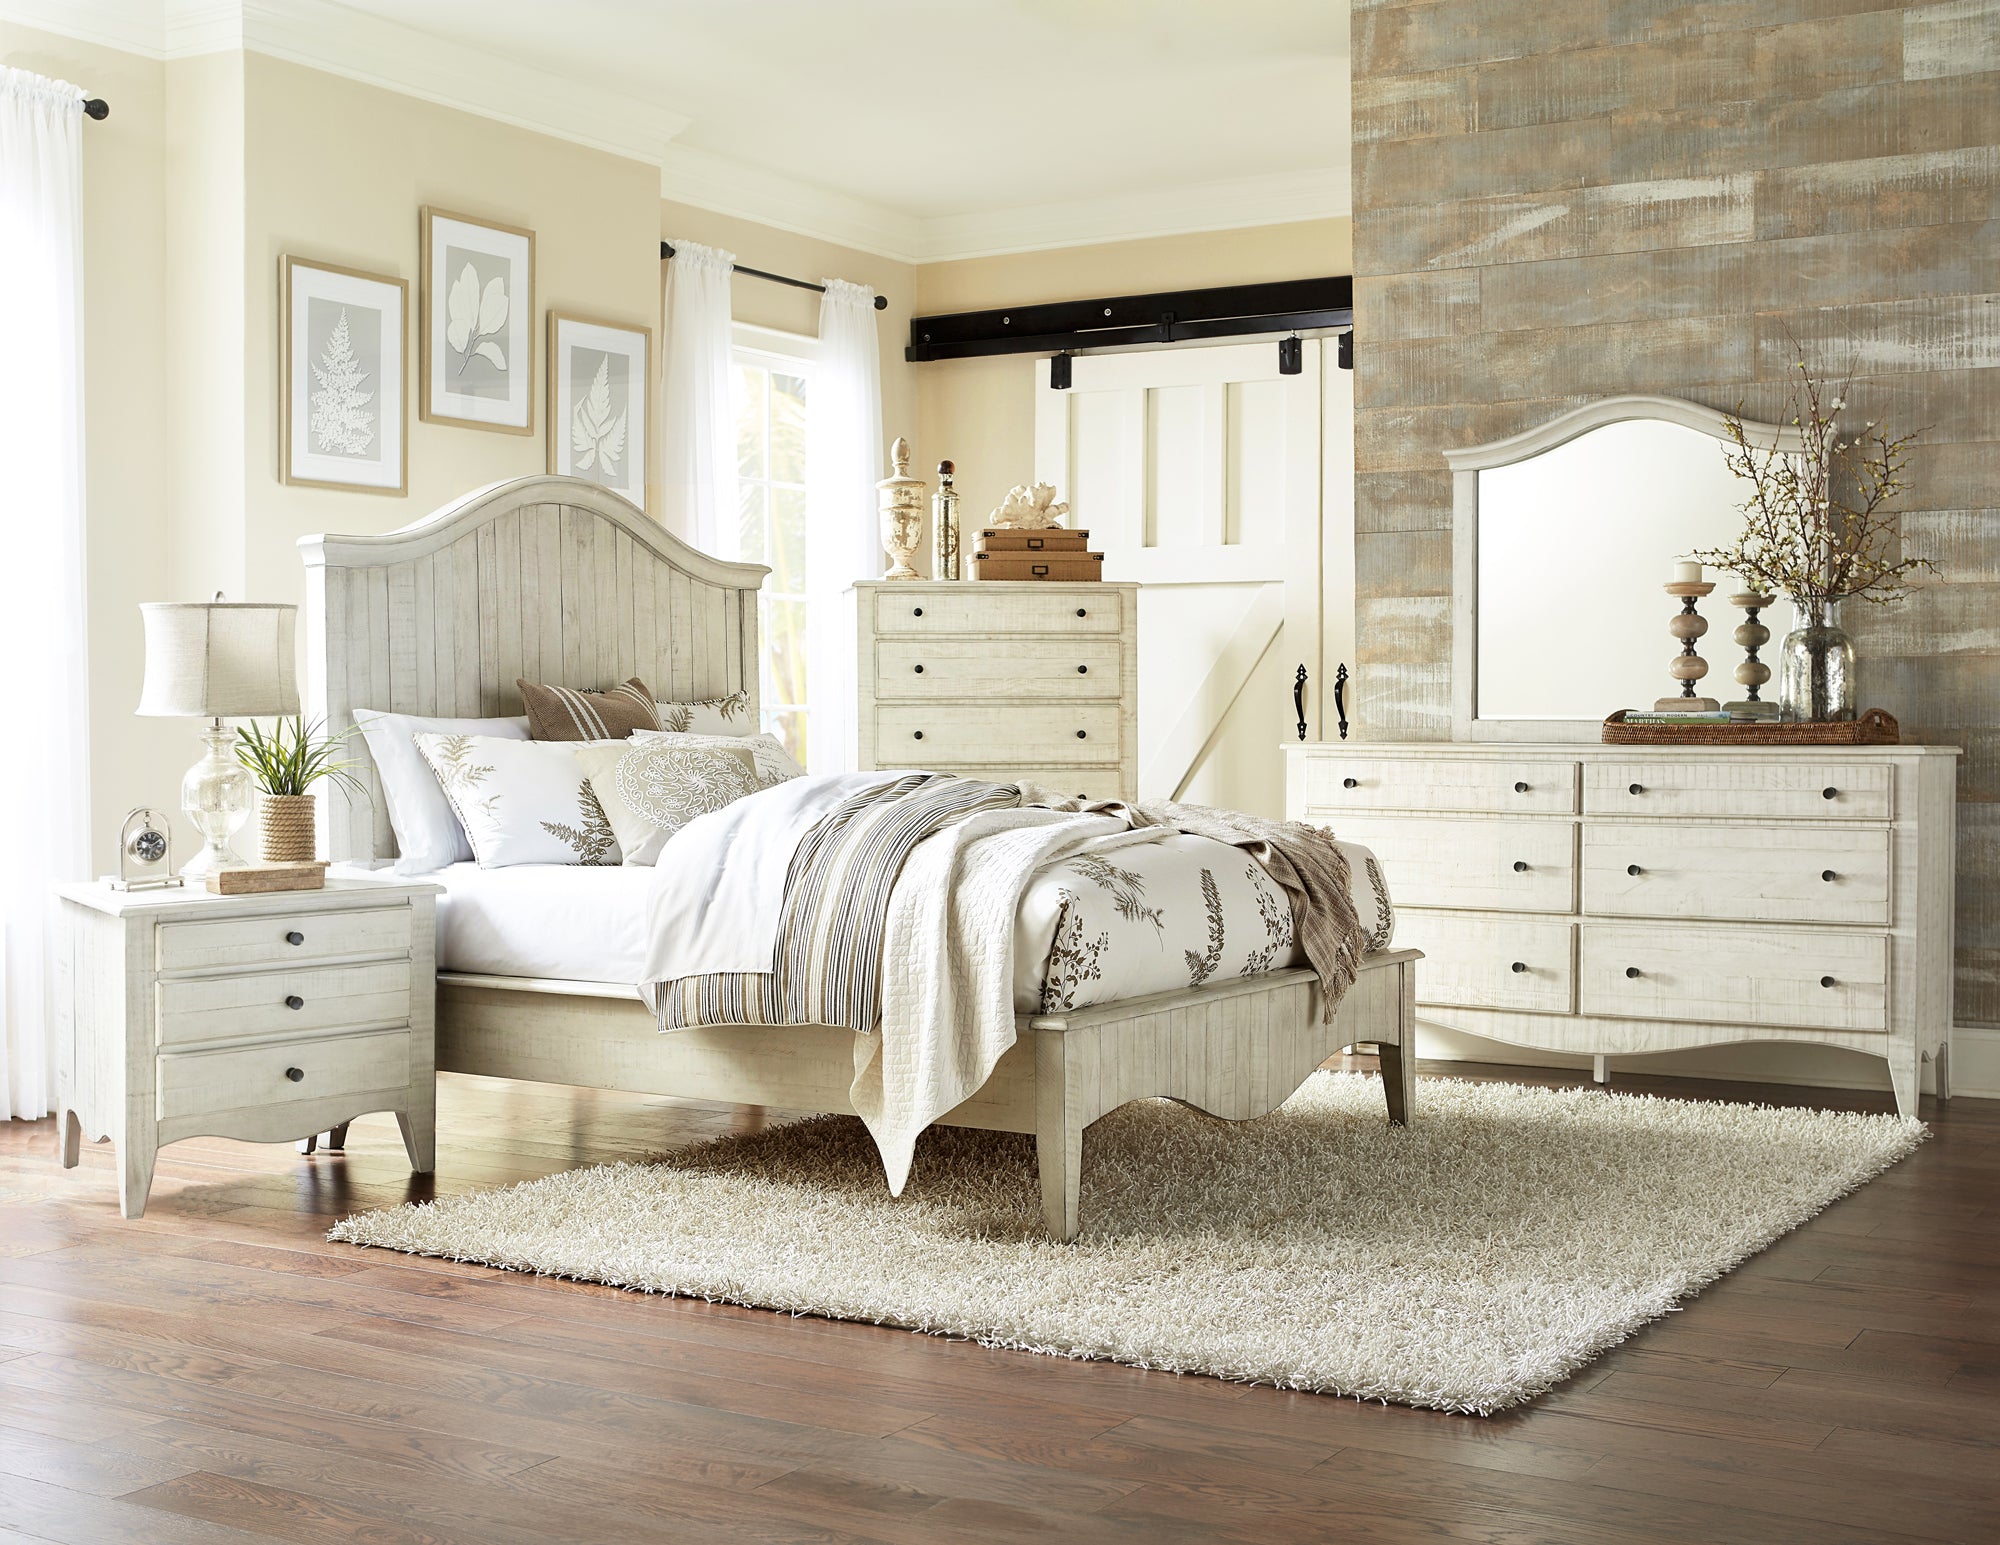 cardi's bedroom furniture